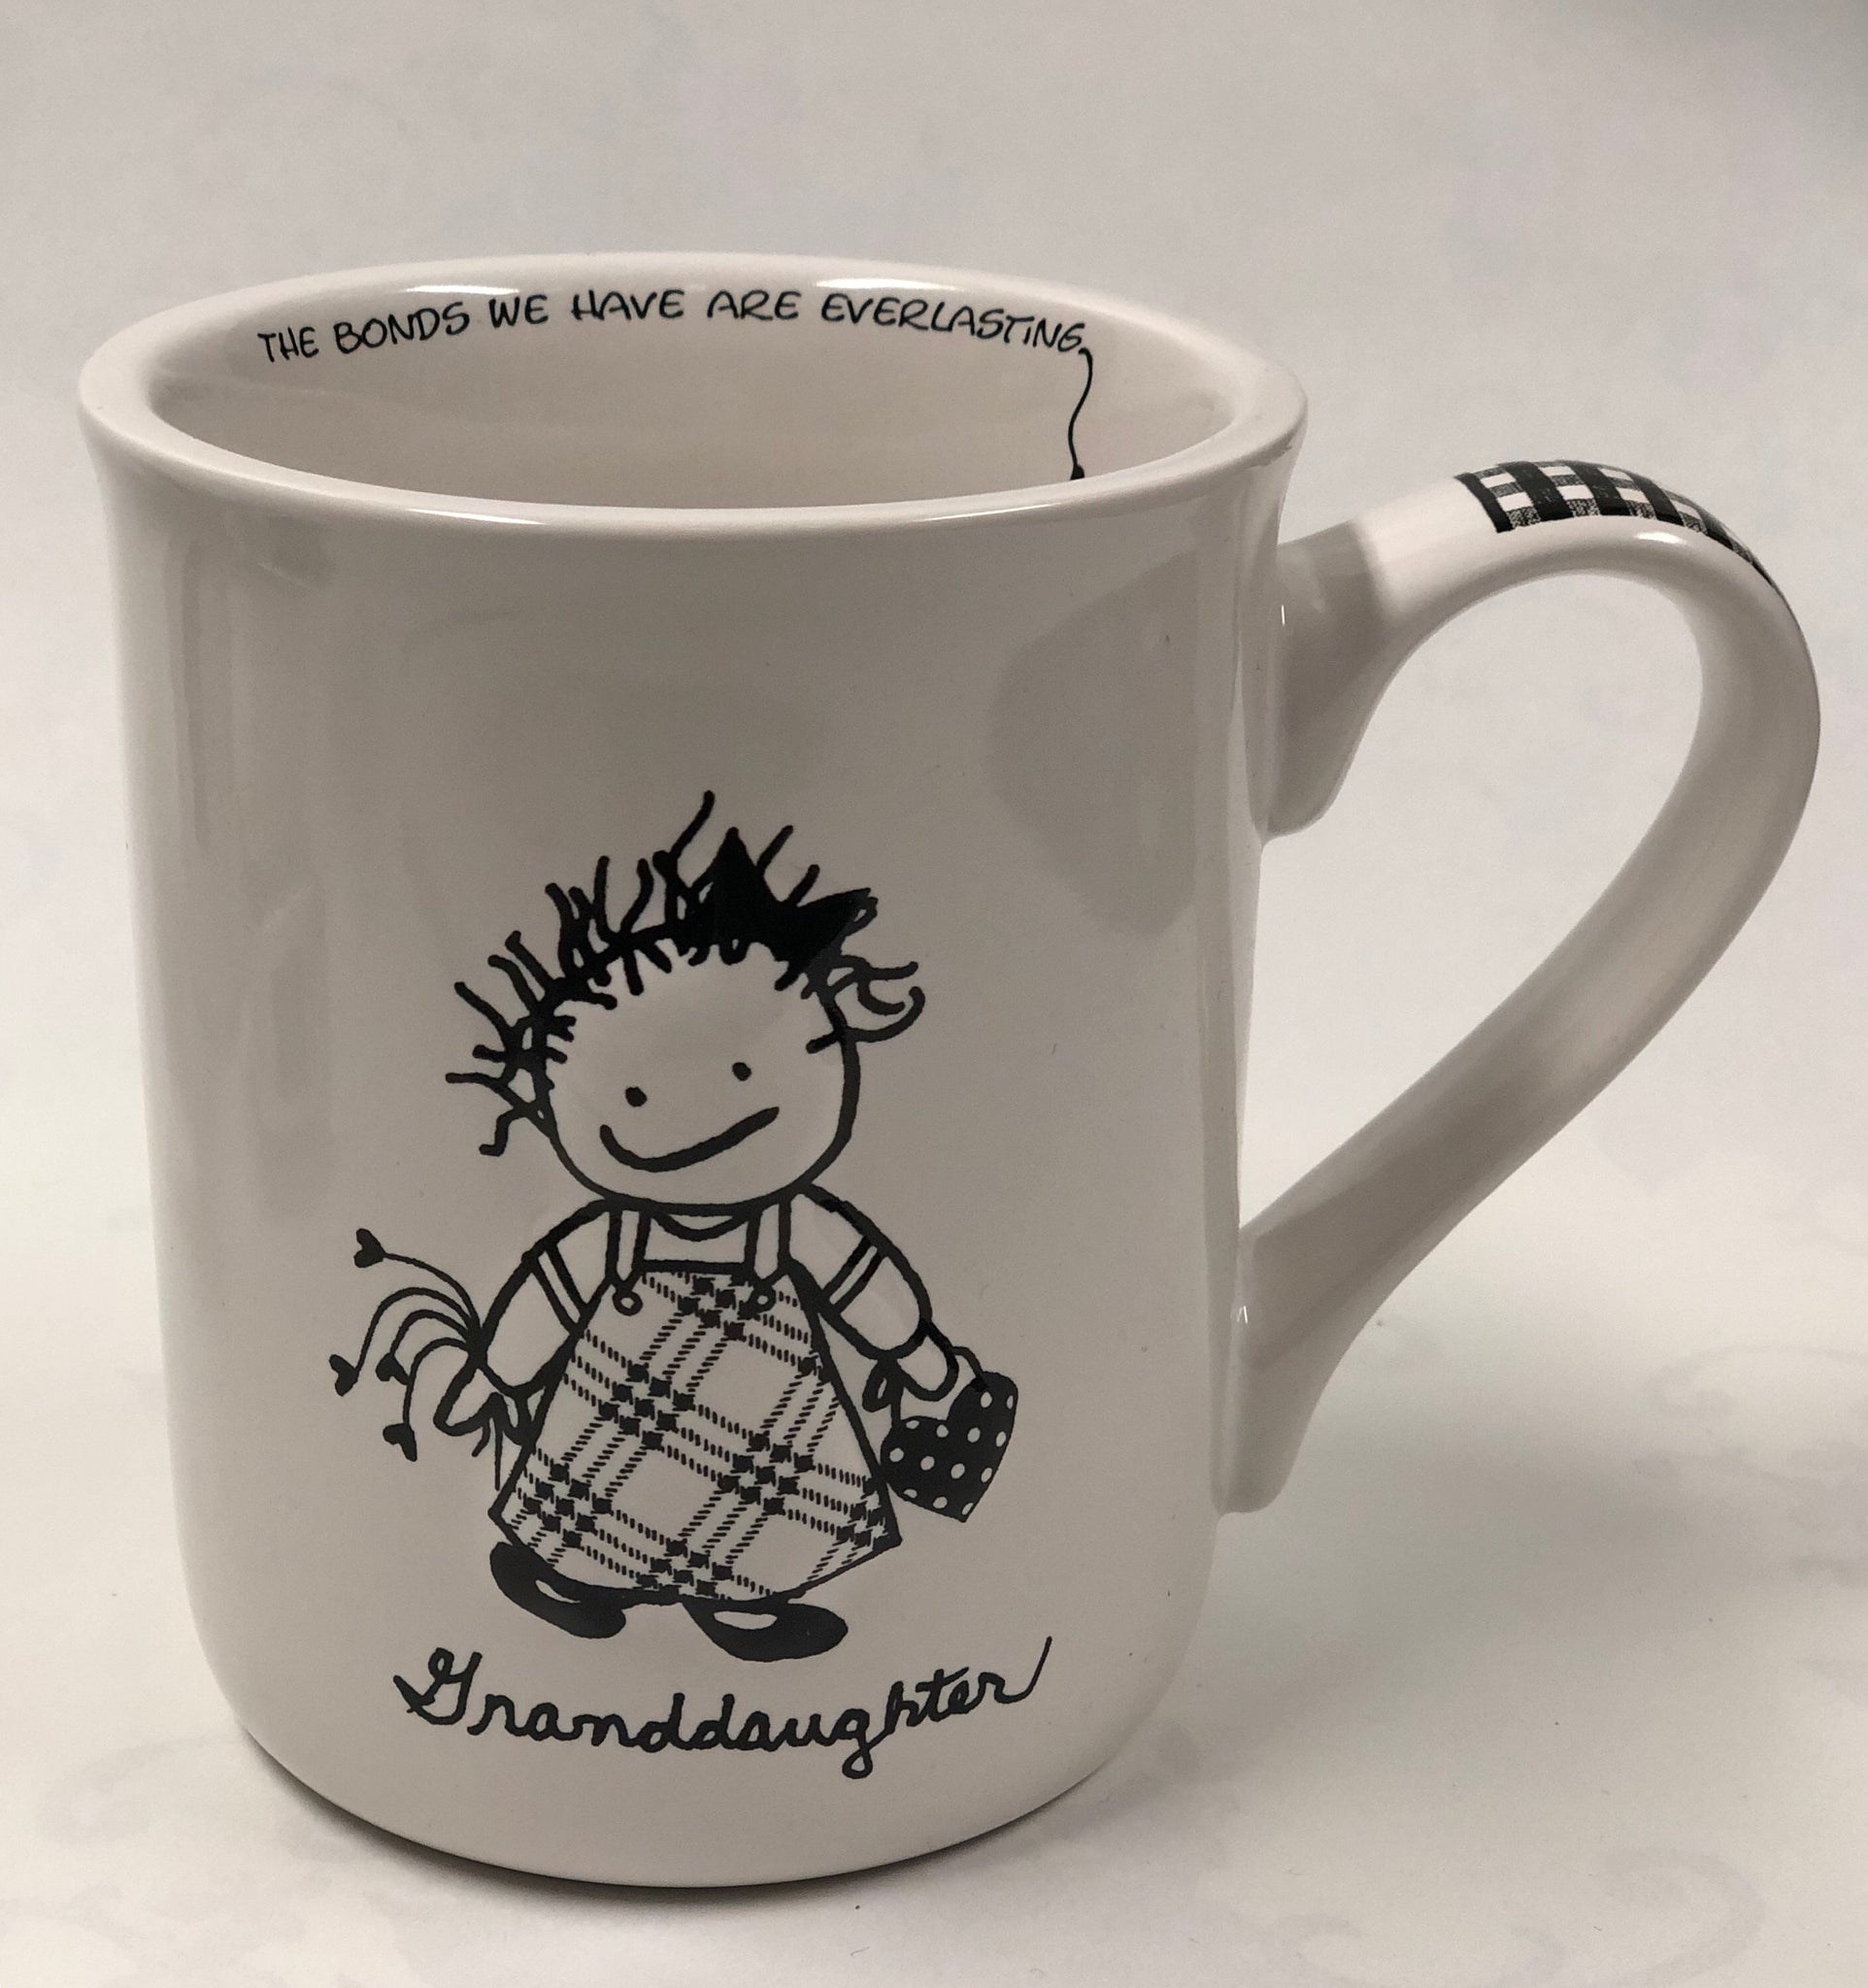 Granddaughter mug